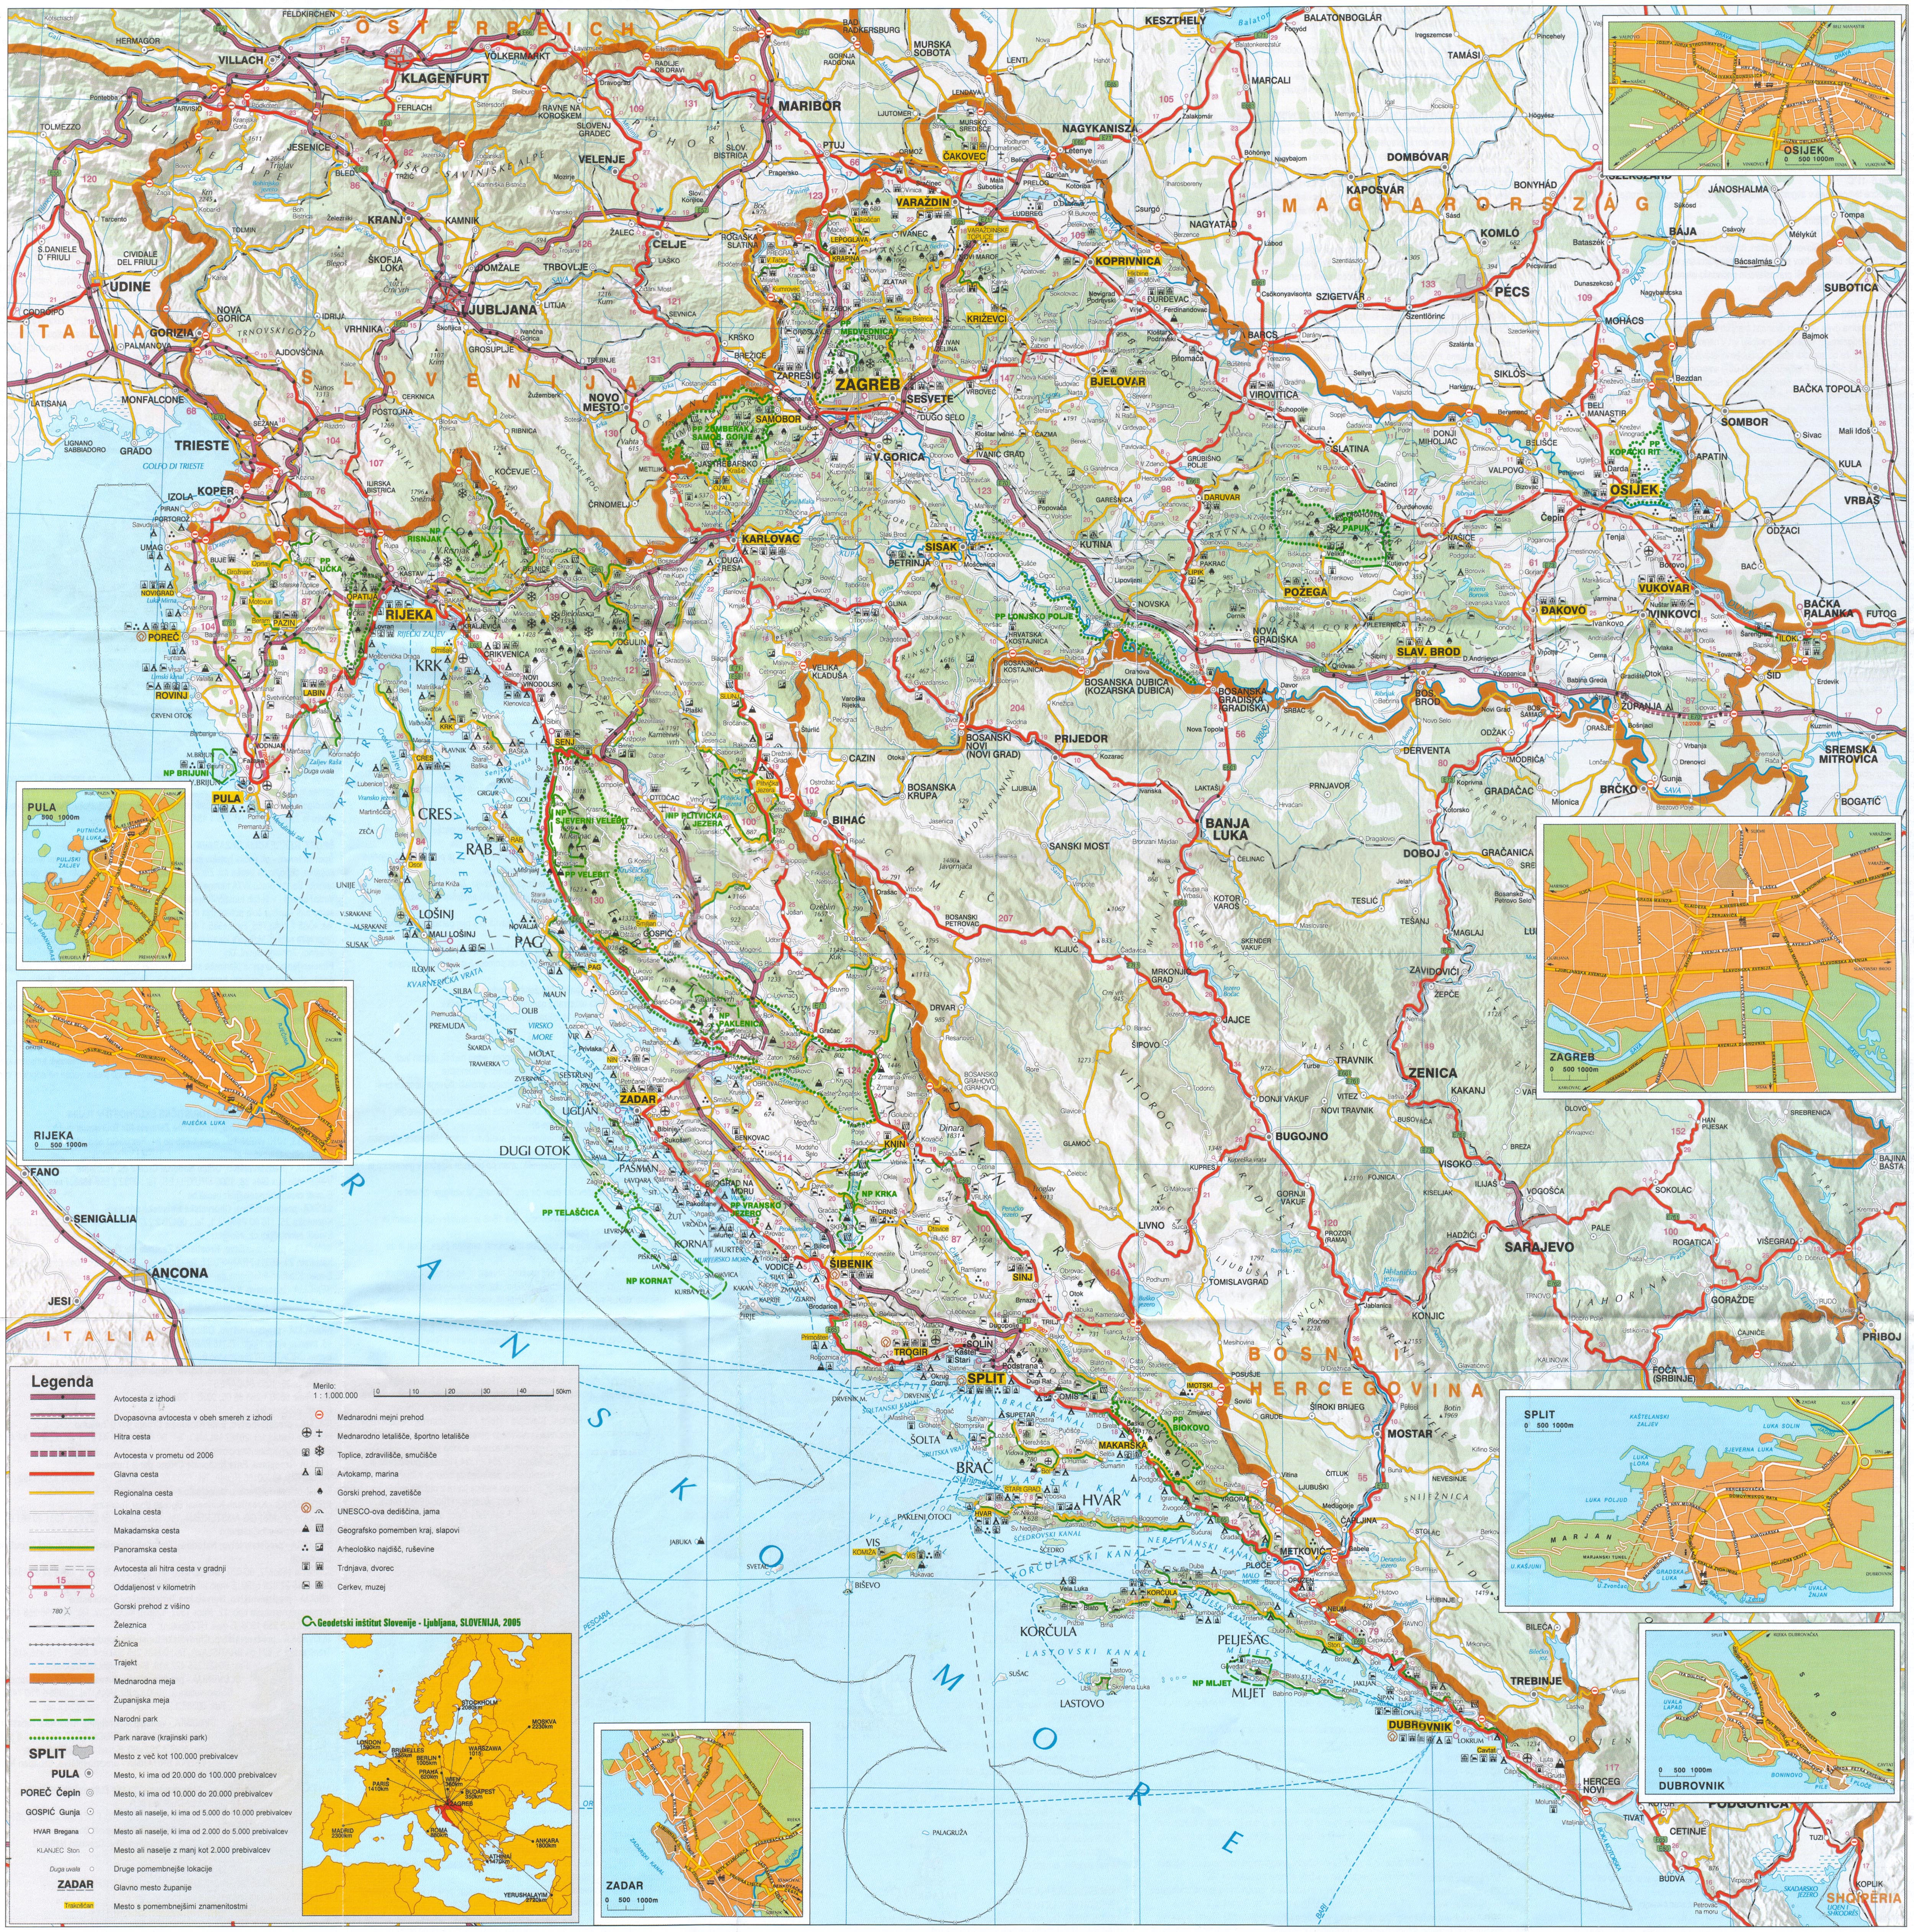 Croatia Travel Map